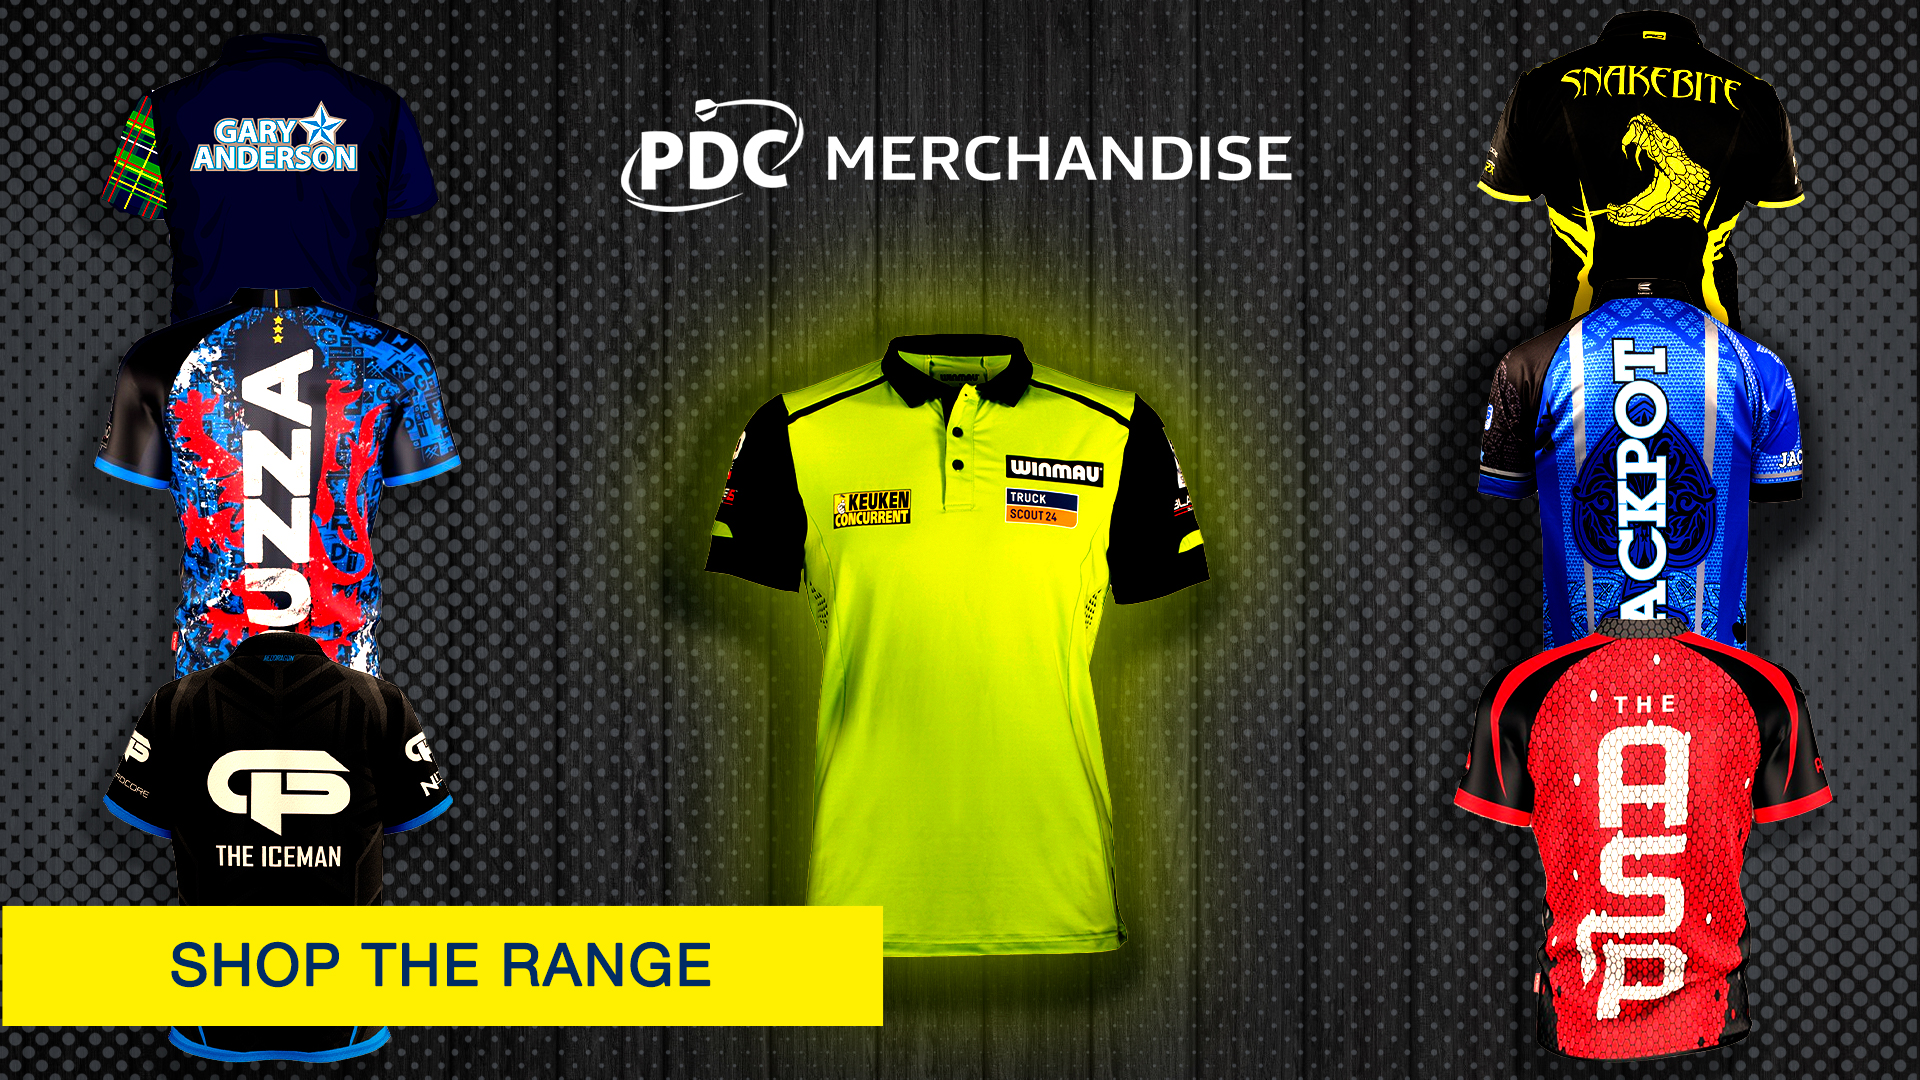 PDC Merchandise